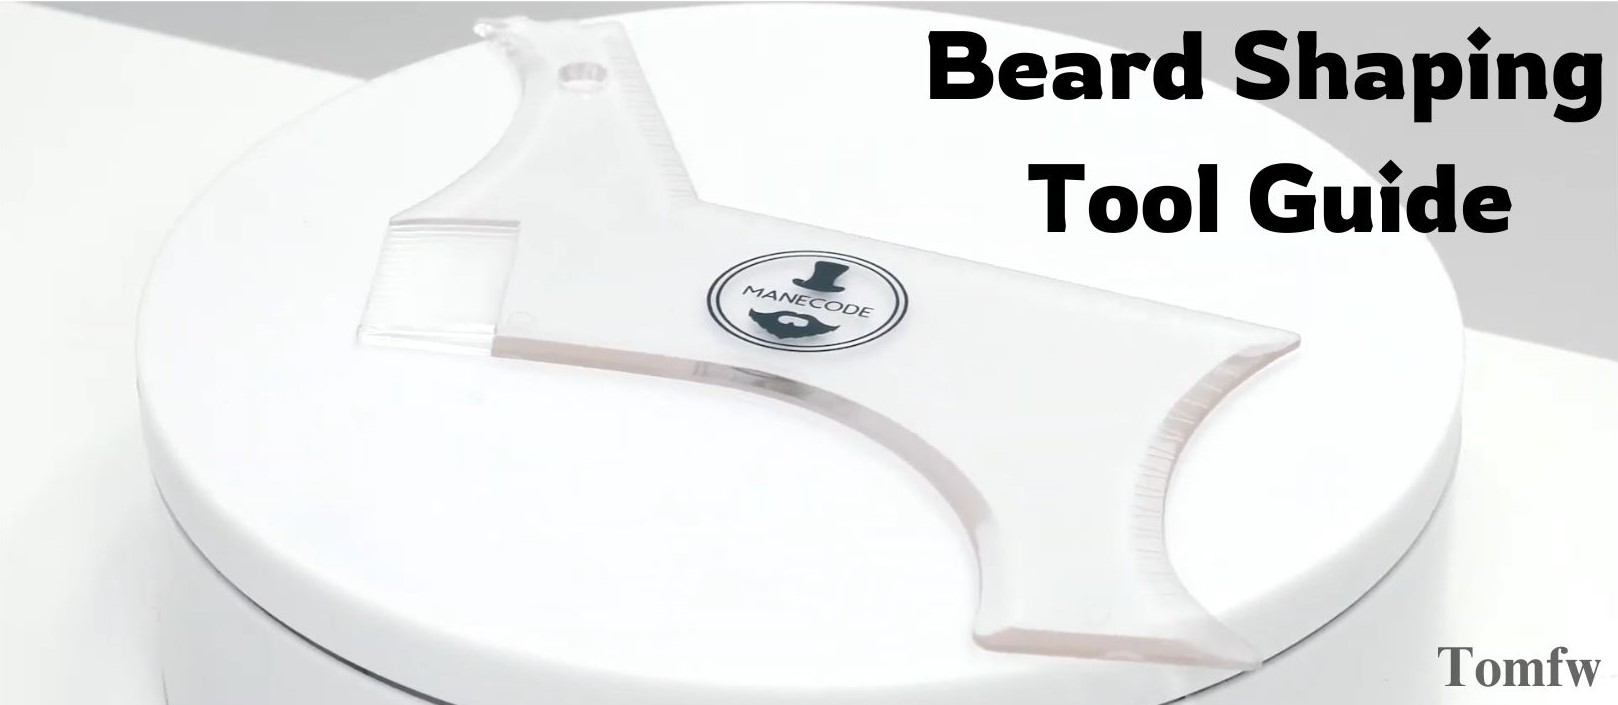 beard shaping tools guide